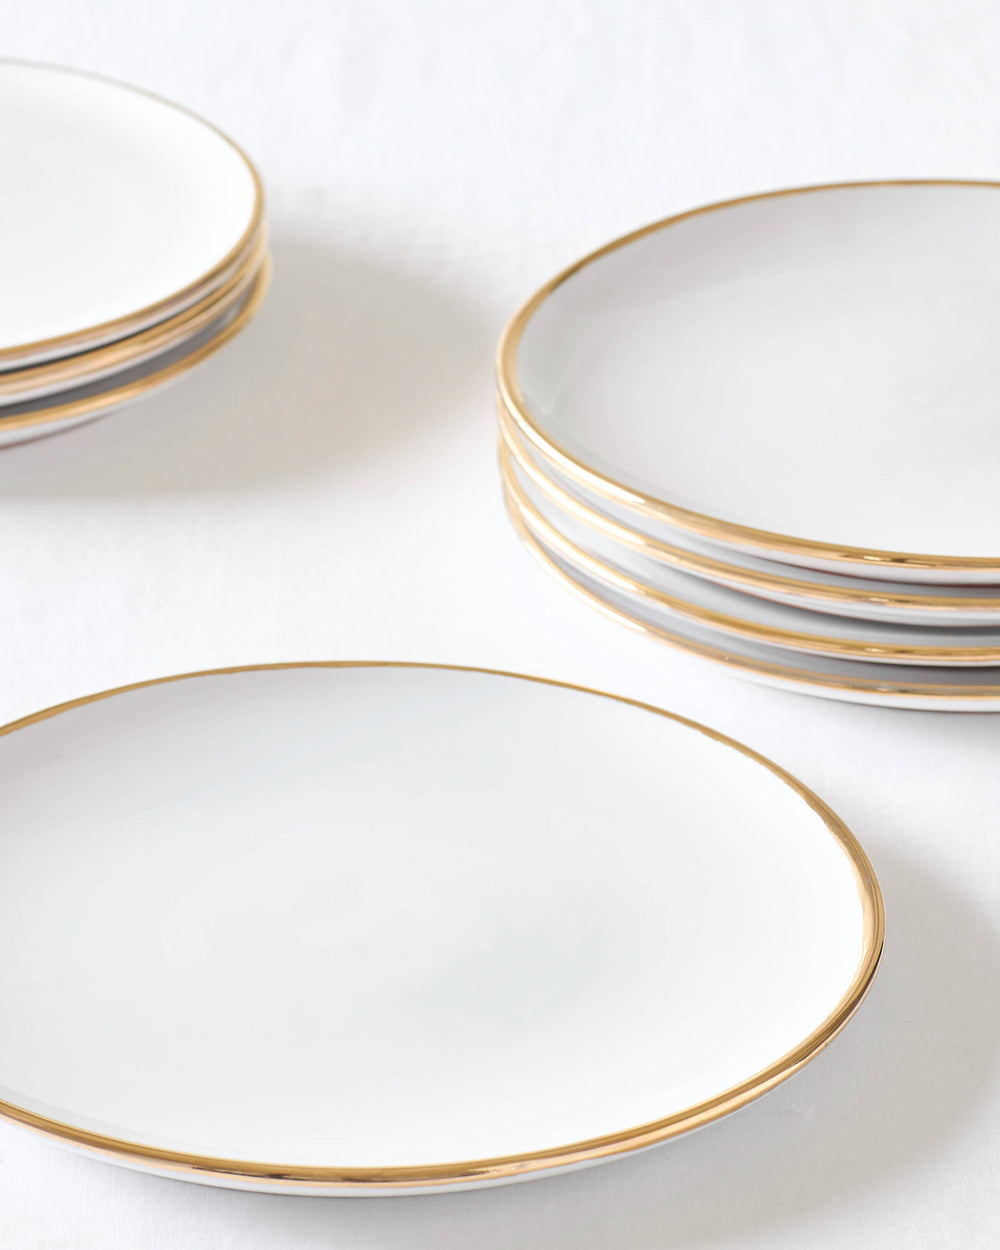 Fairkind's Fez Gold-Rimmed ceramic dinner plate stacked on white table.